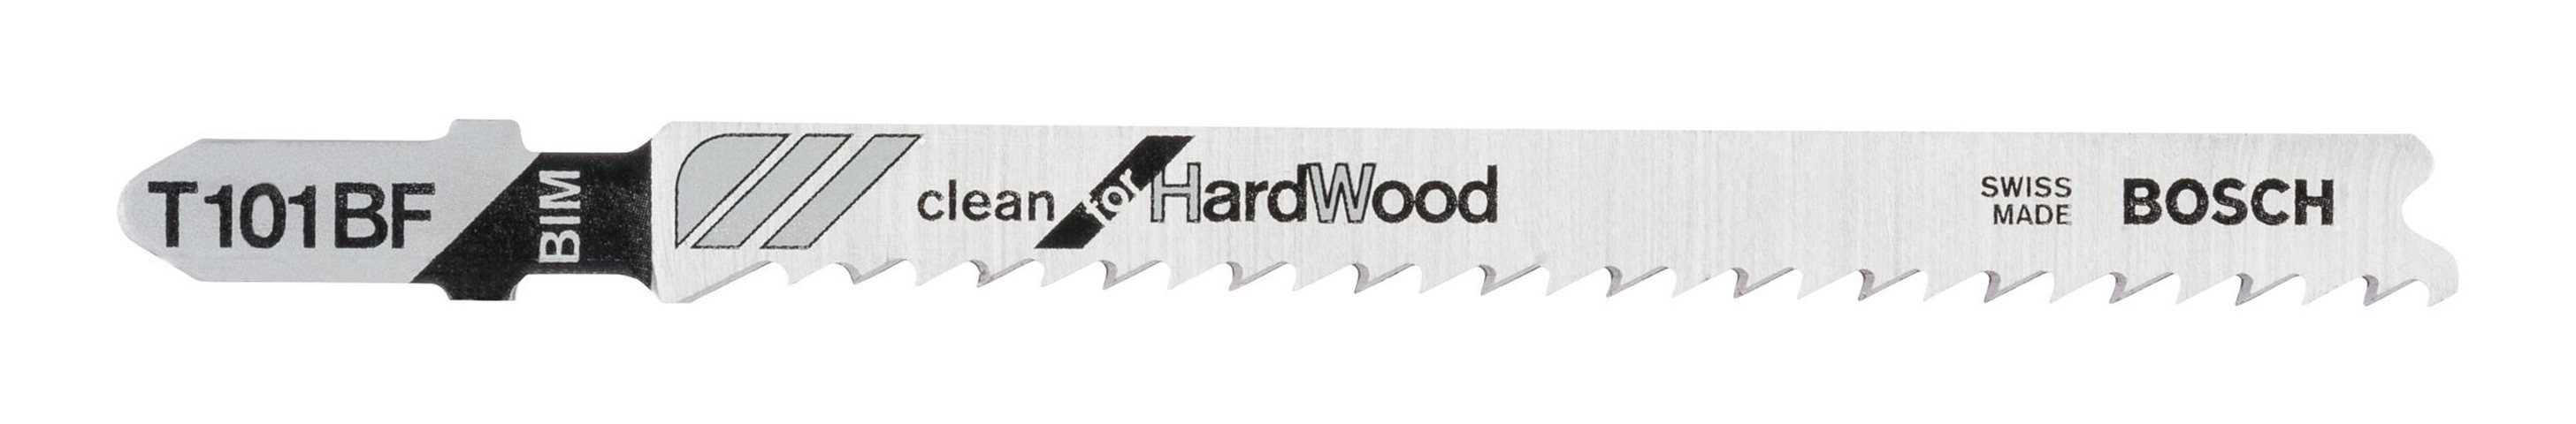 25er-Pack BOSCH BF (25 Stichsägeblatt Hard Wood - for Clean Stück), T 101